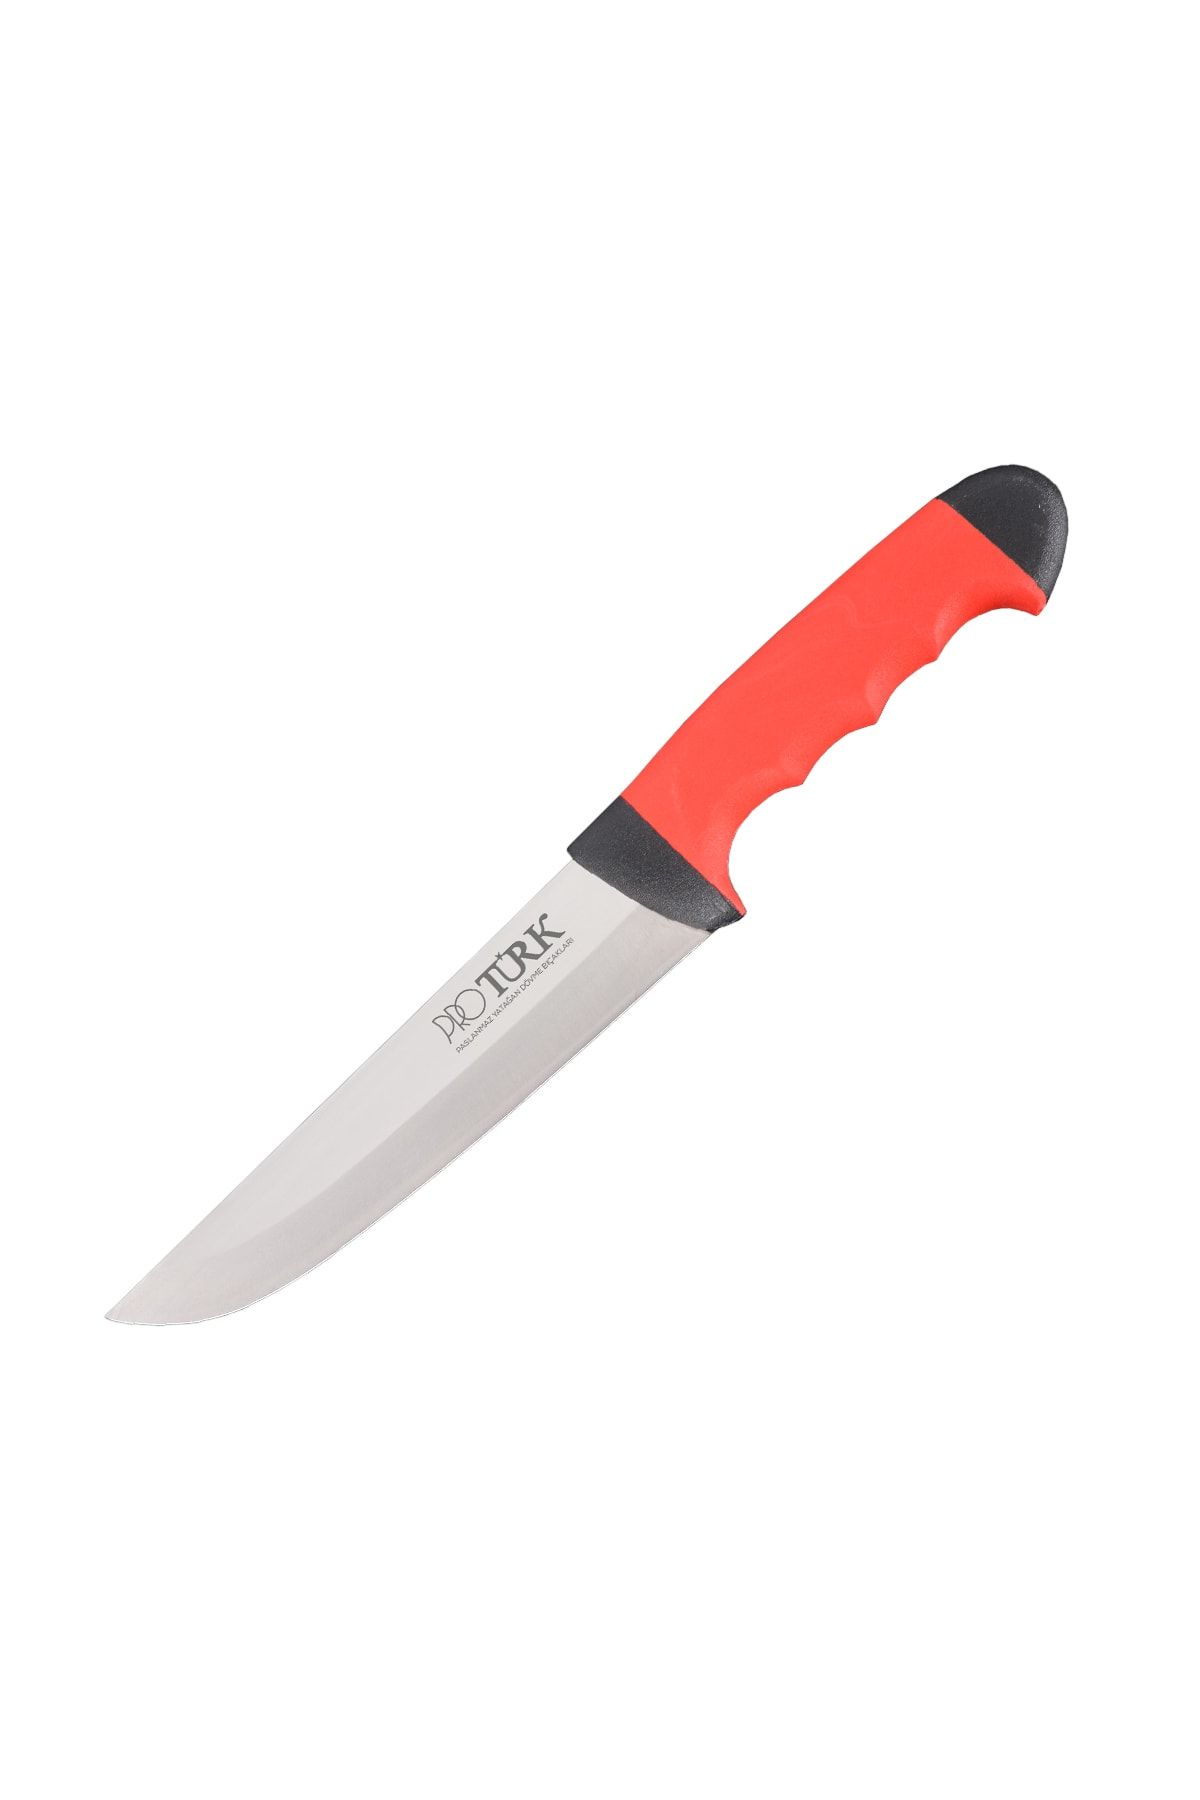 protürk 3 Numara Et Bıçağı